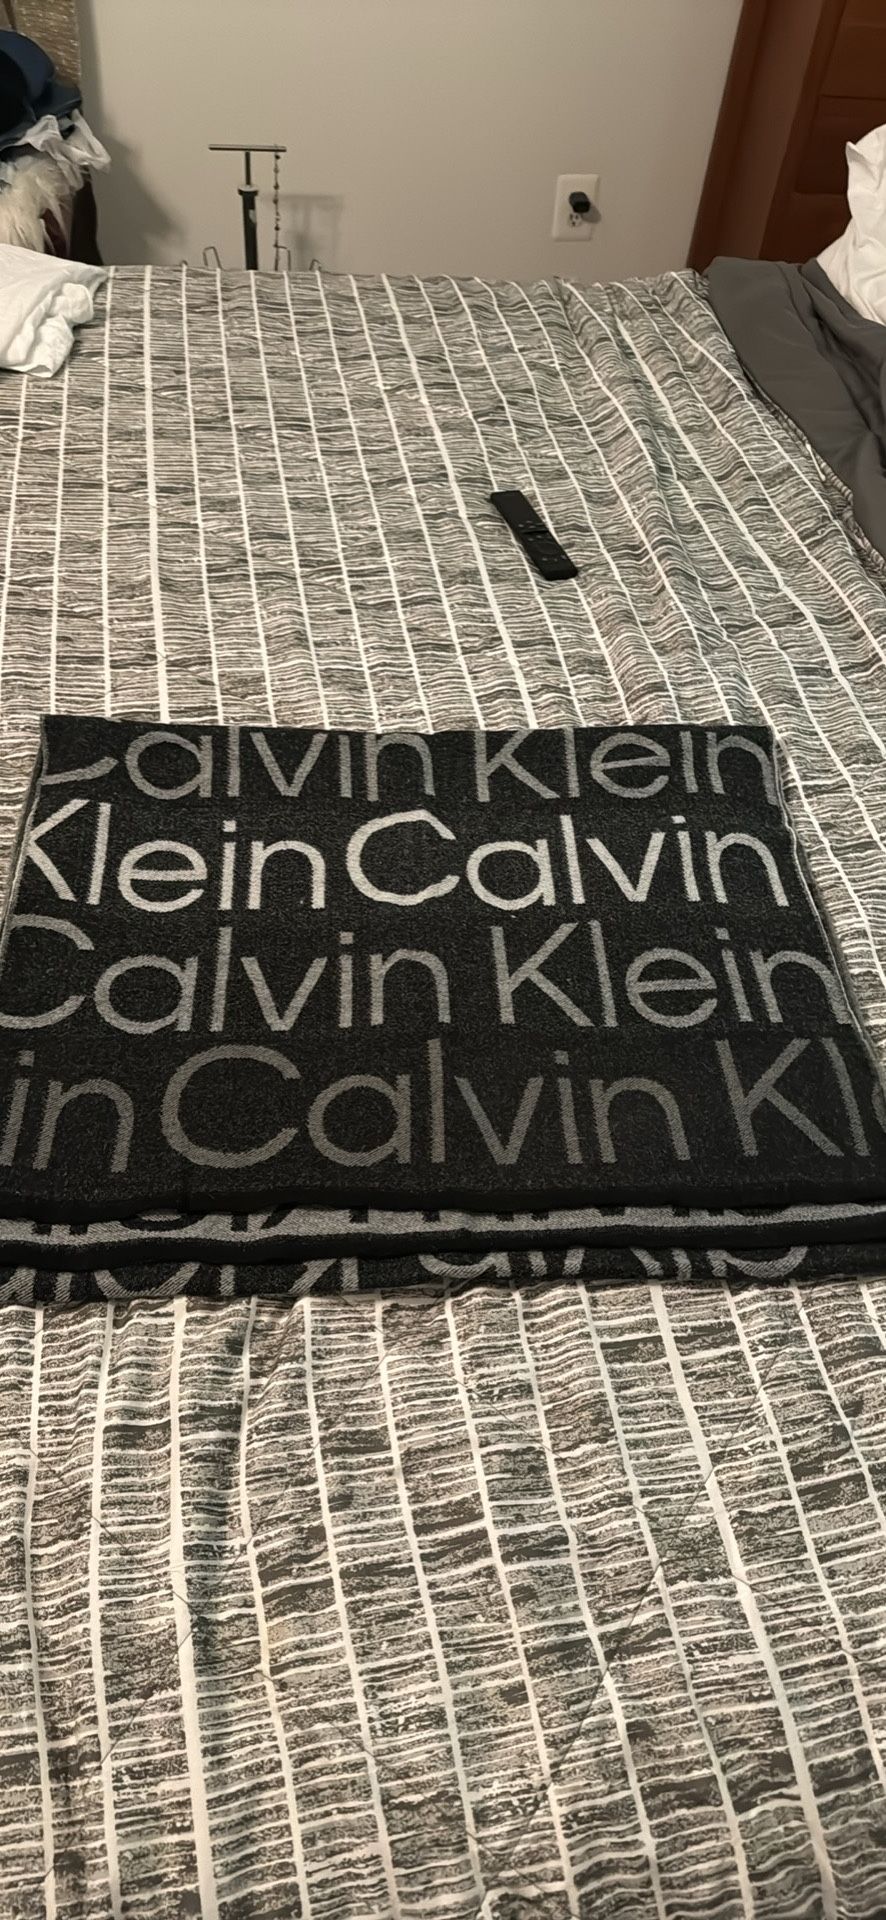 Calvin Klein Scarf